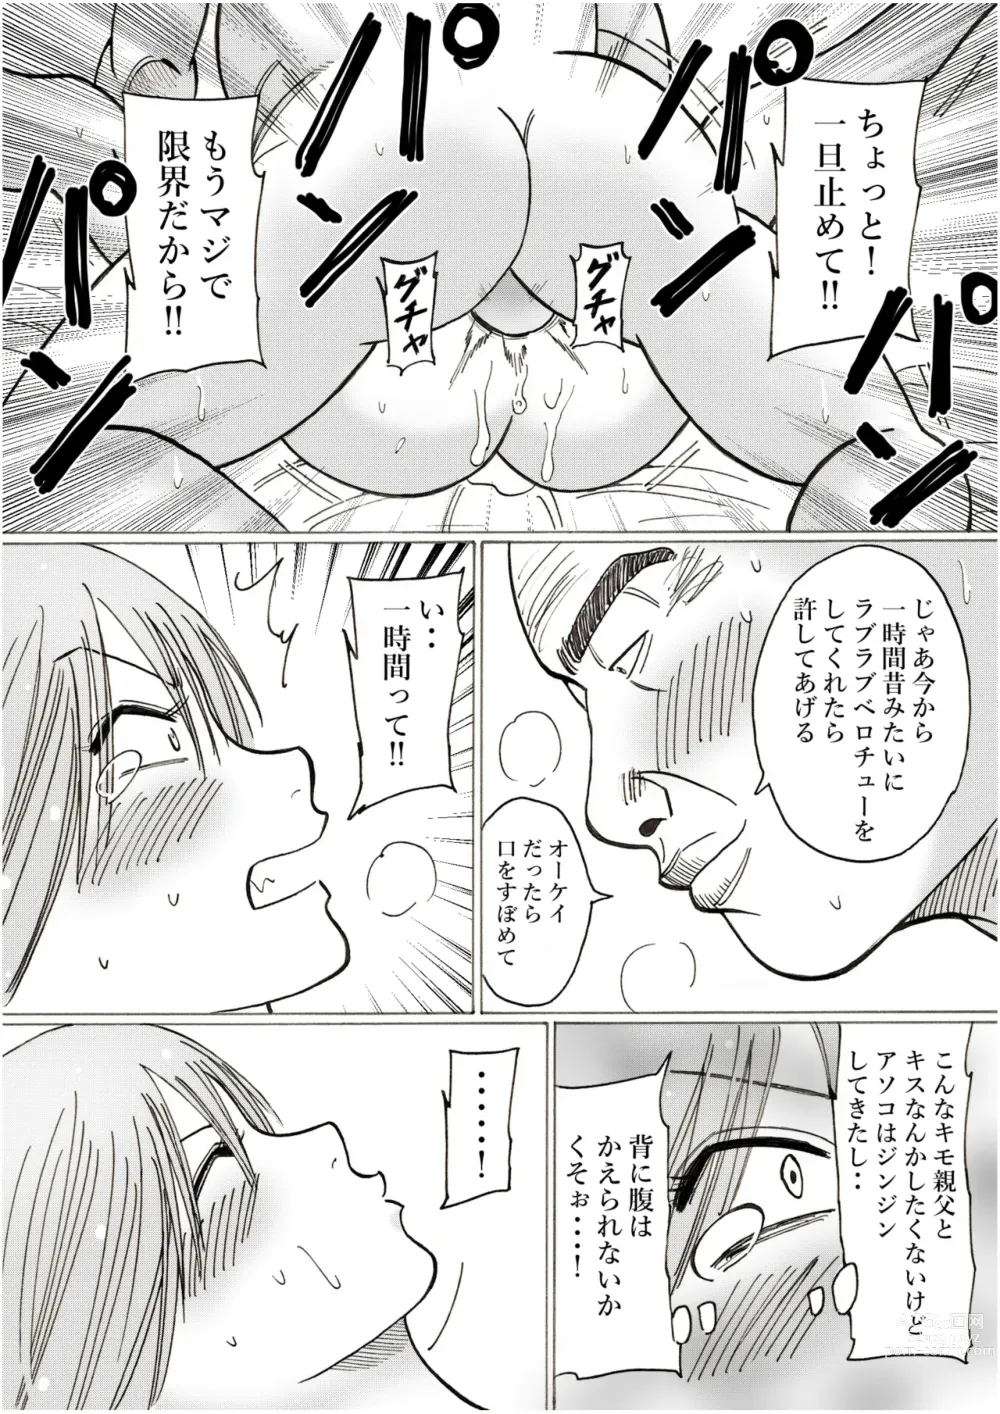 Page 43 of doujinshi Risato